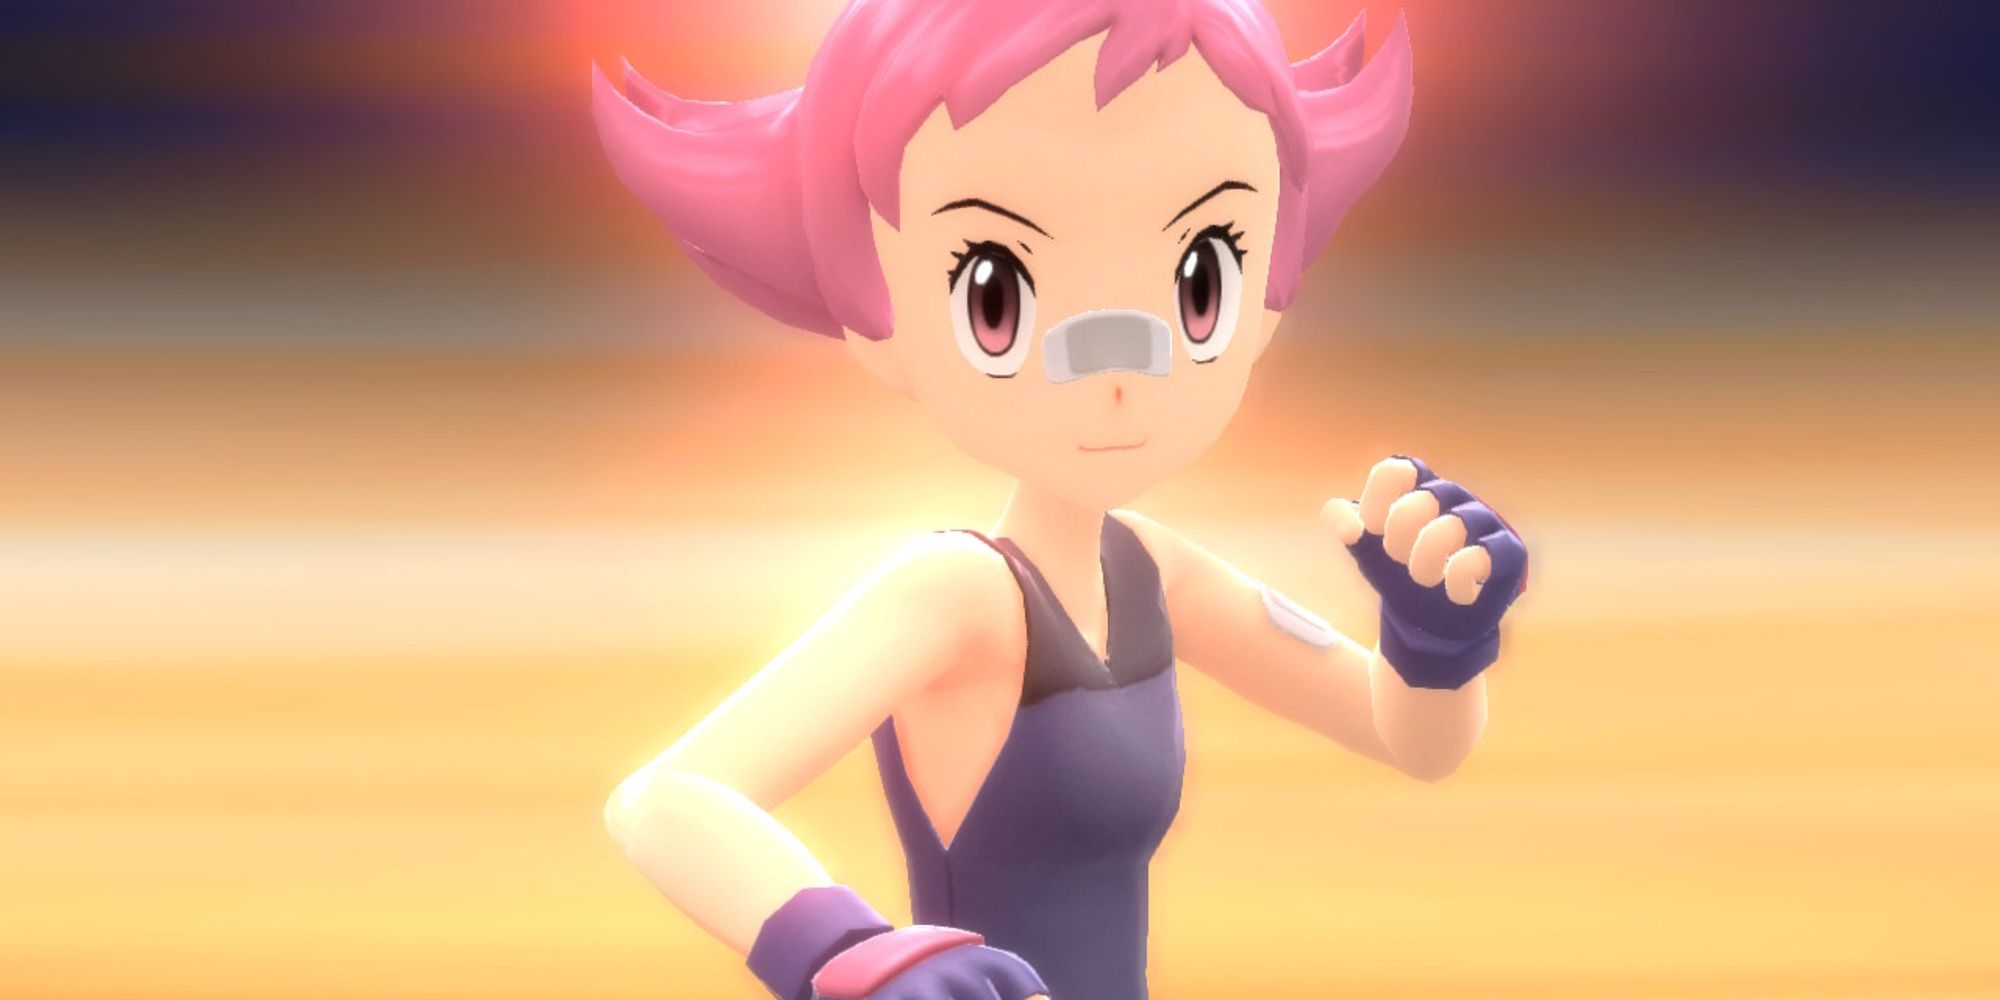 Maylene in a fighting pose in Pokémon BDSP